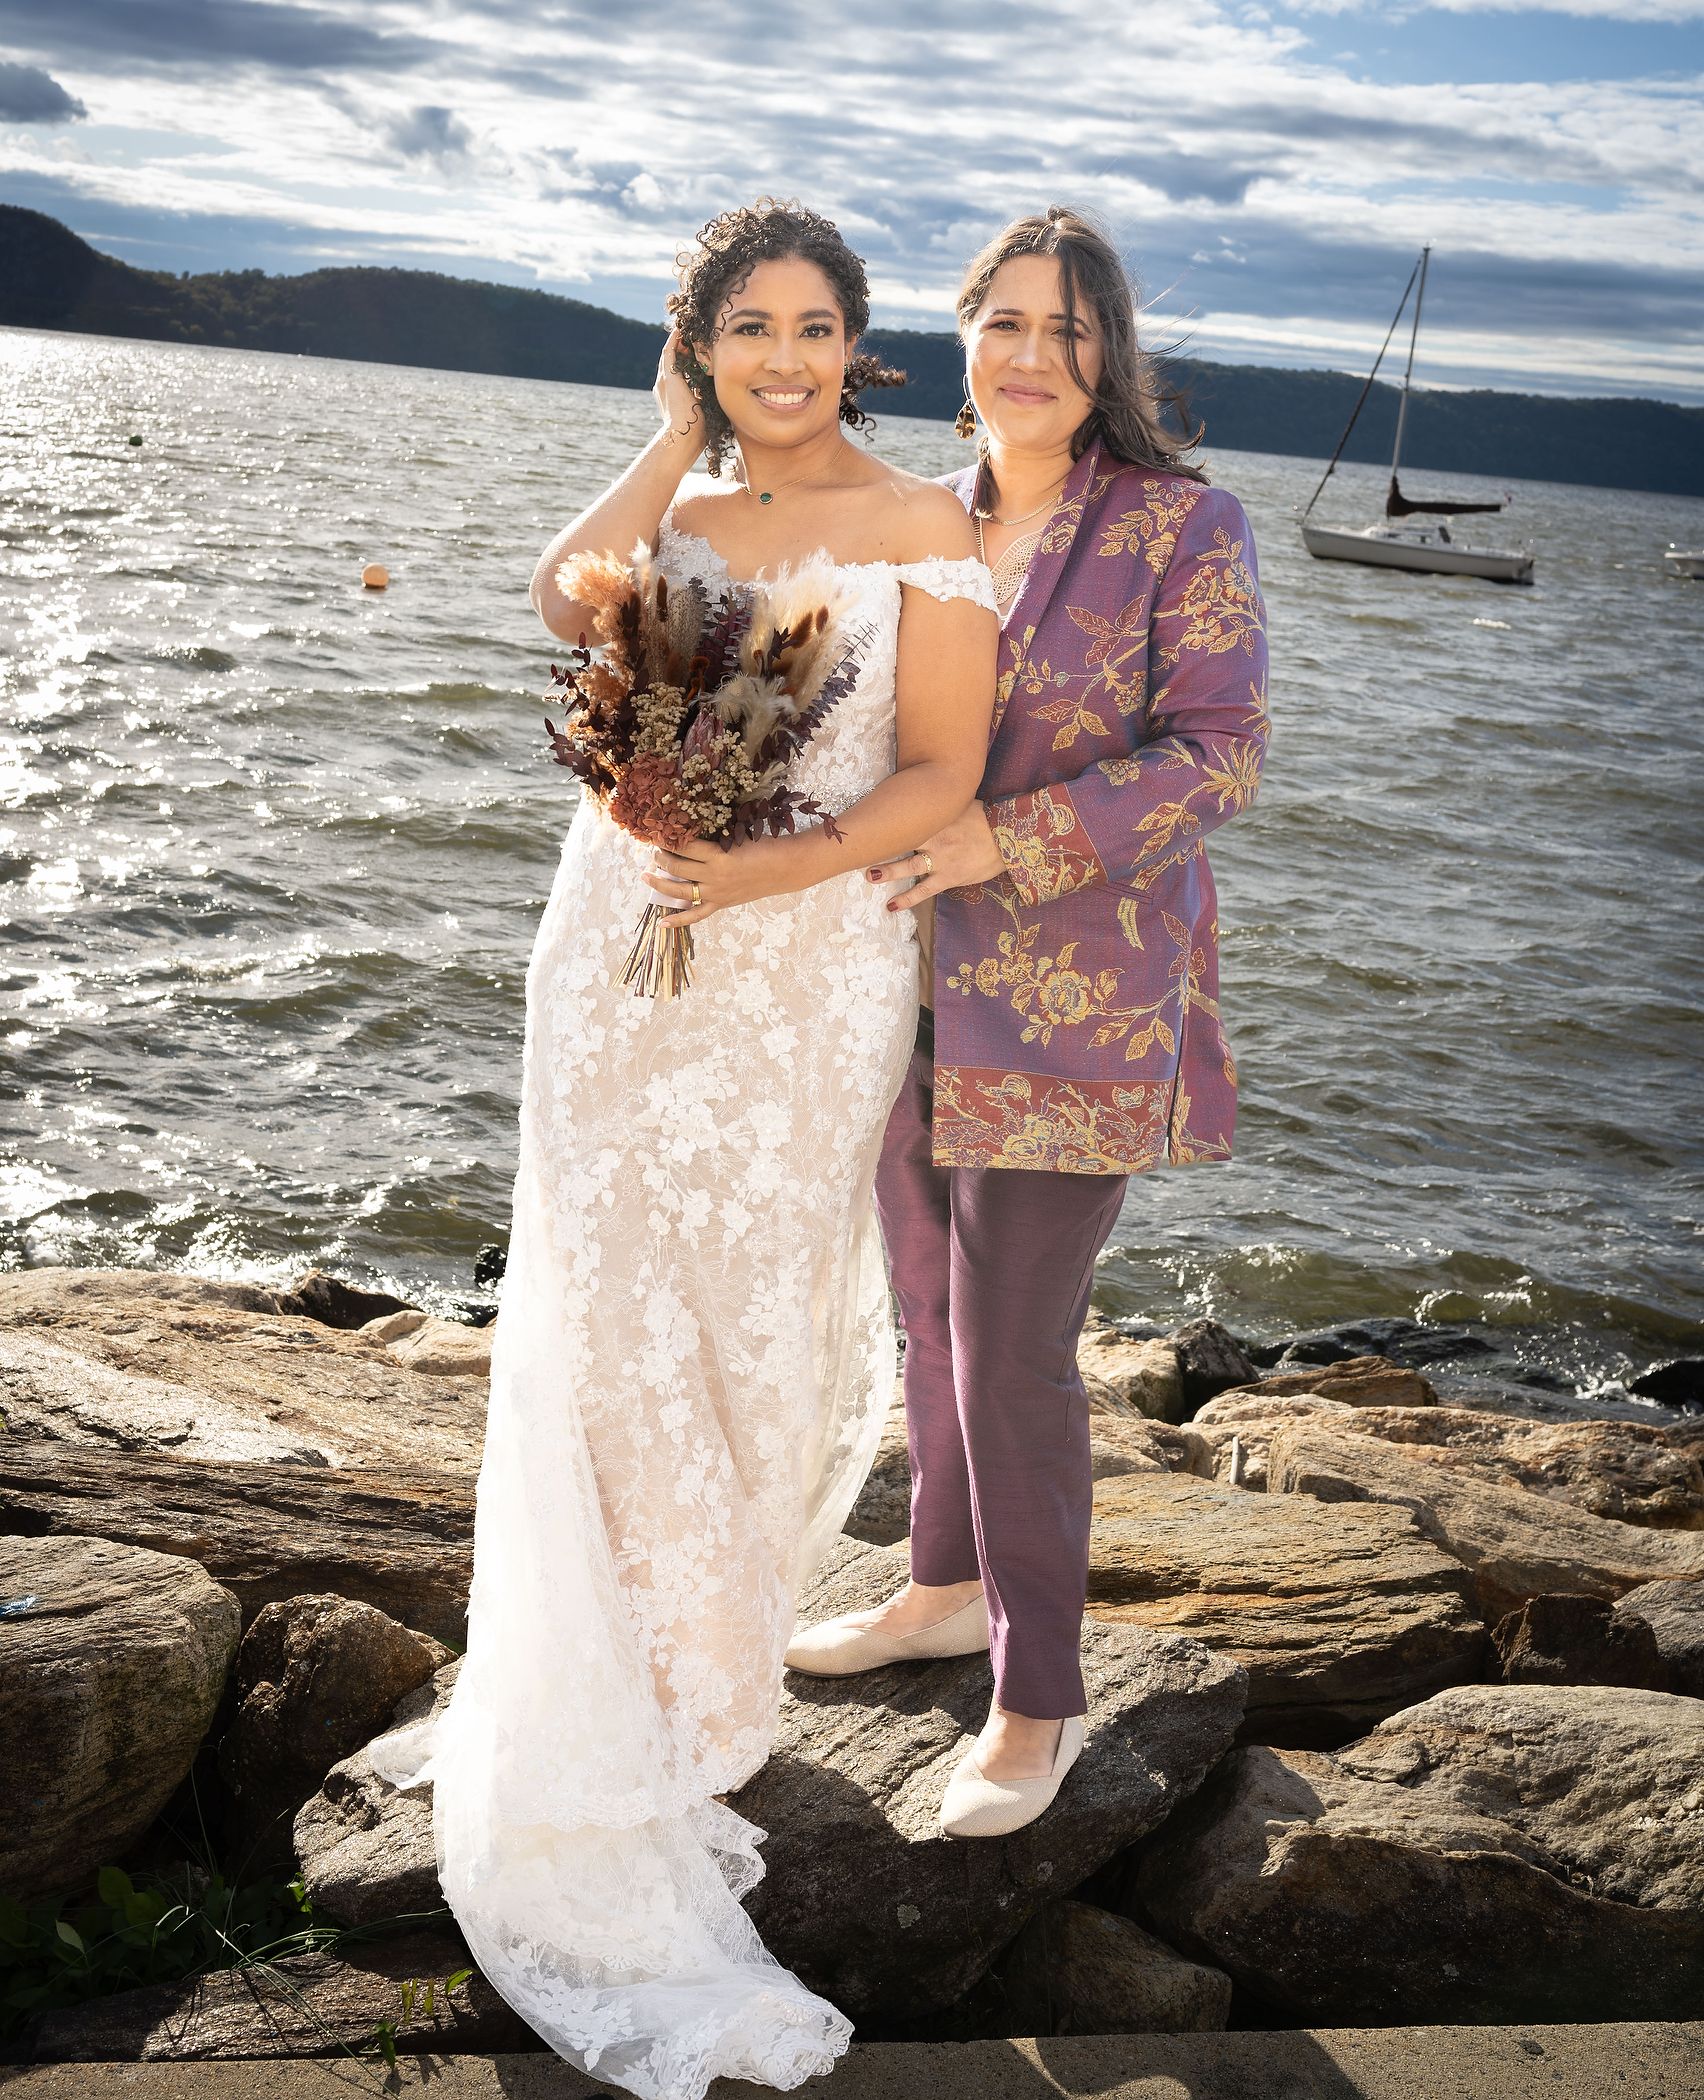 A Hudson River Wedding